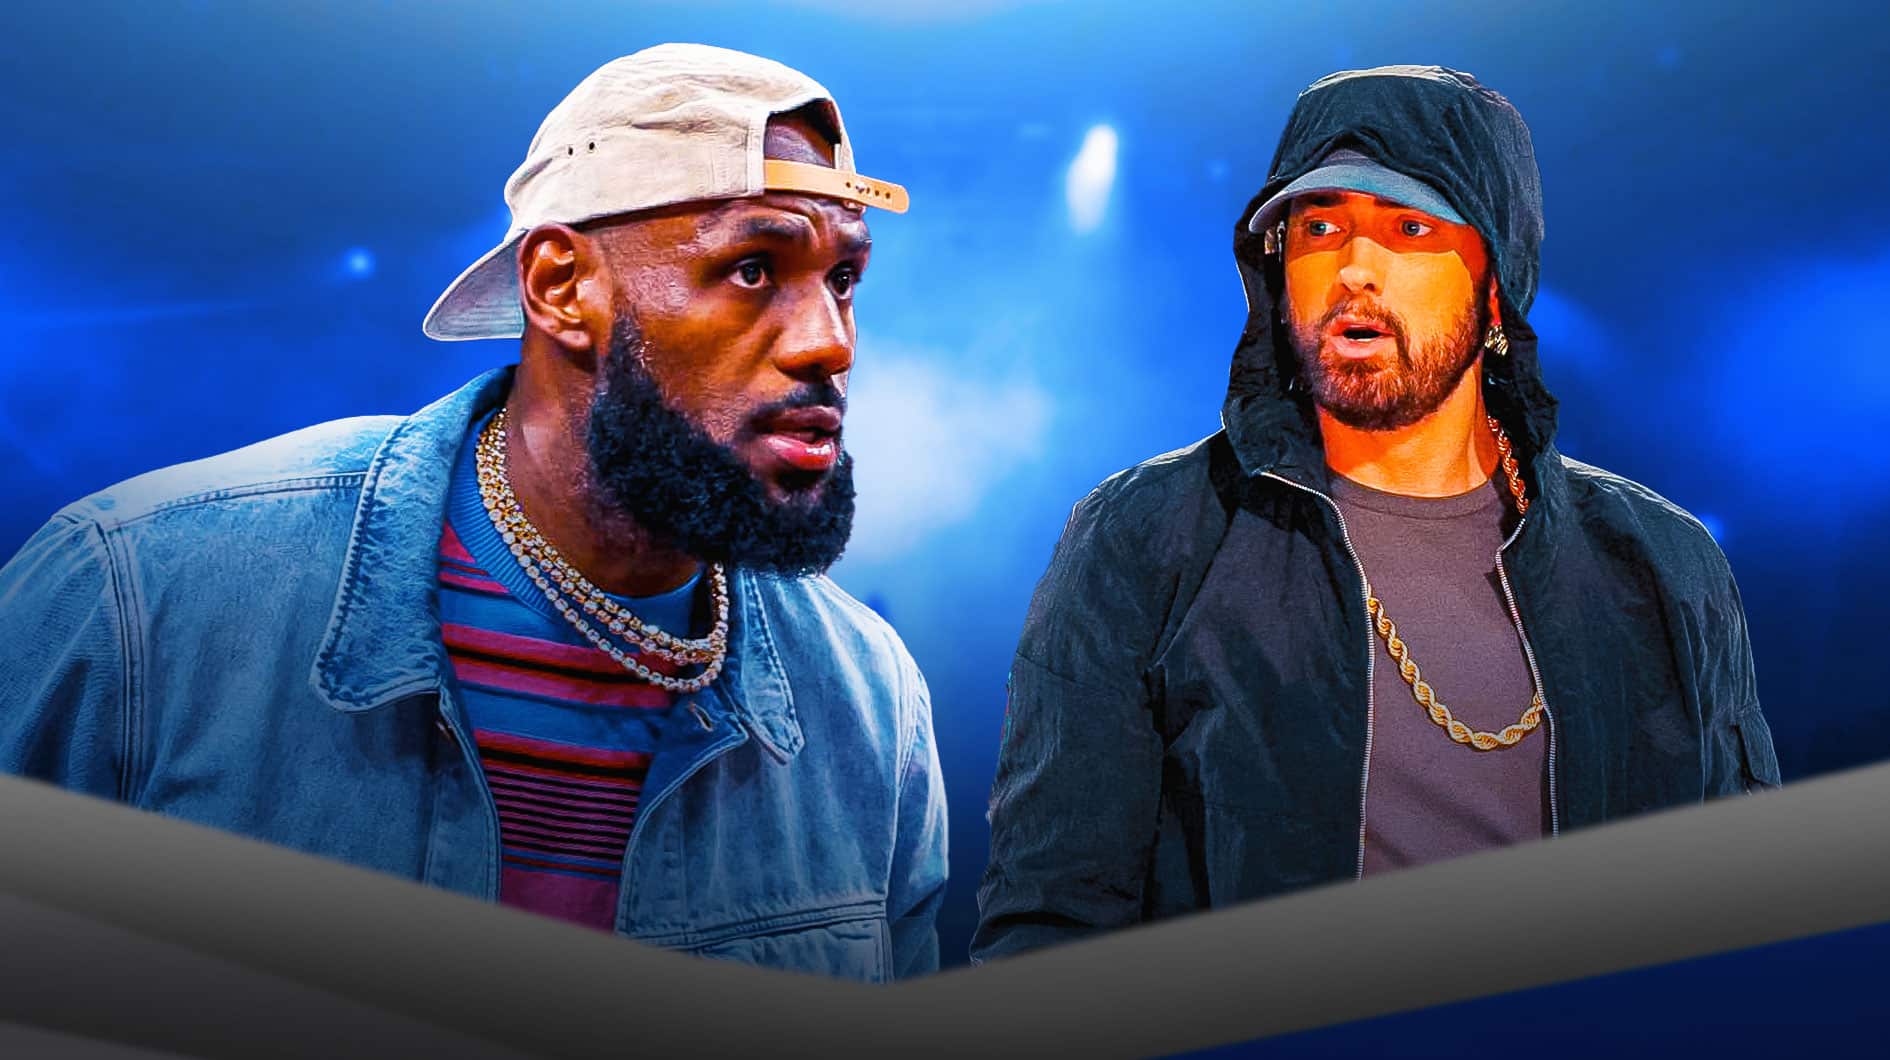 Lakers star LeBron James' epic reaction to Eminem's Houdini track